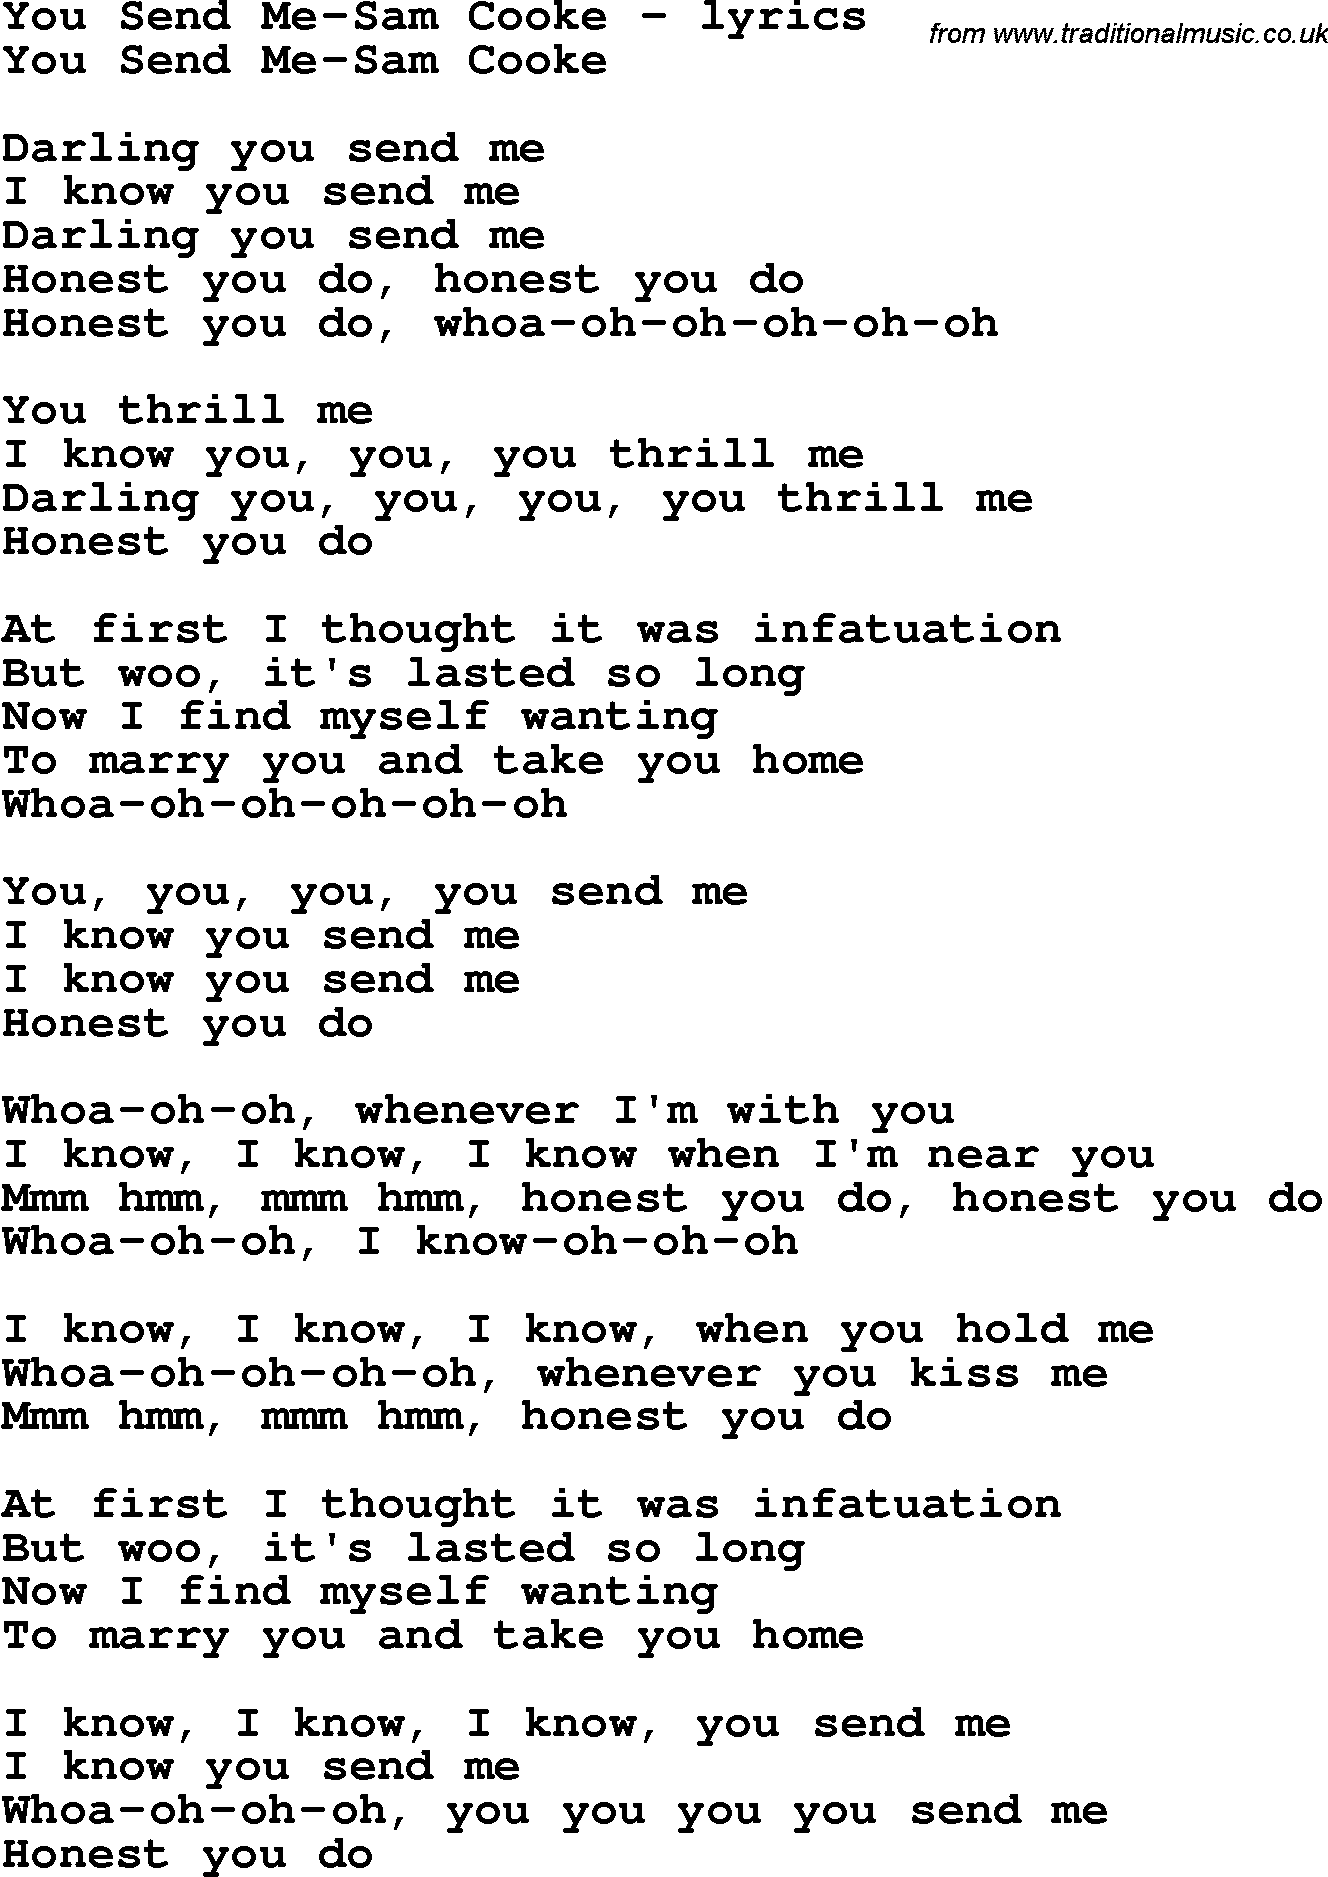 Love Song Lyrics for: You Send Me-Sam Cooke